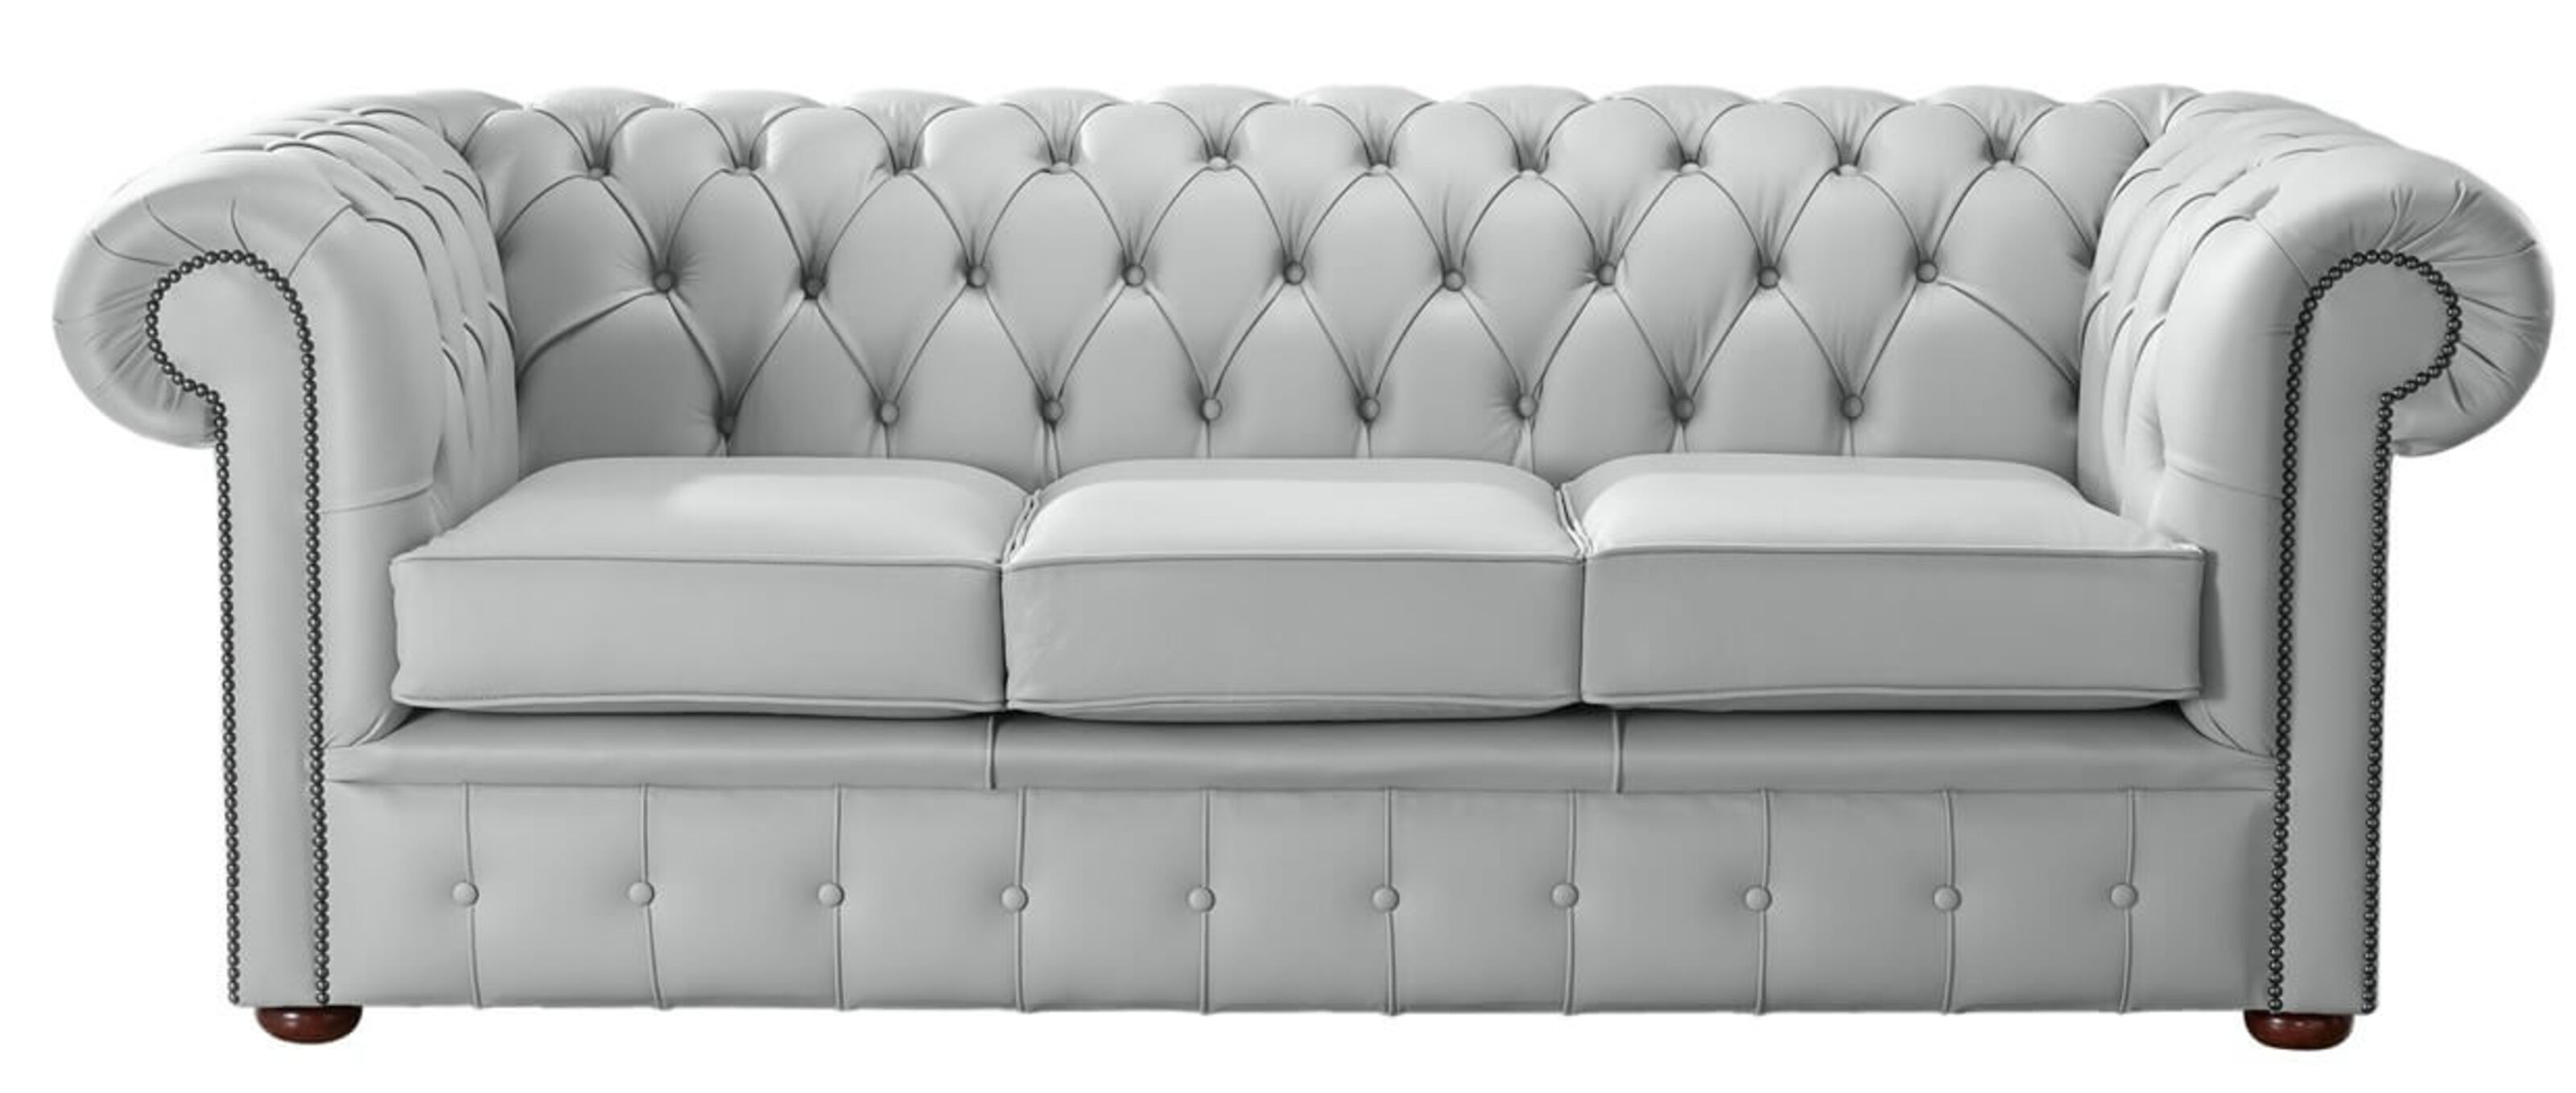 grey leather sofa design ideas